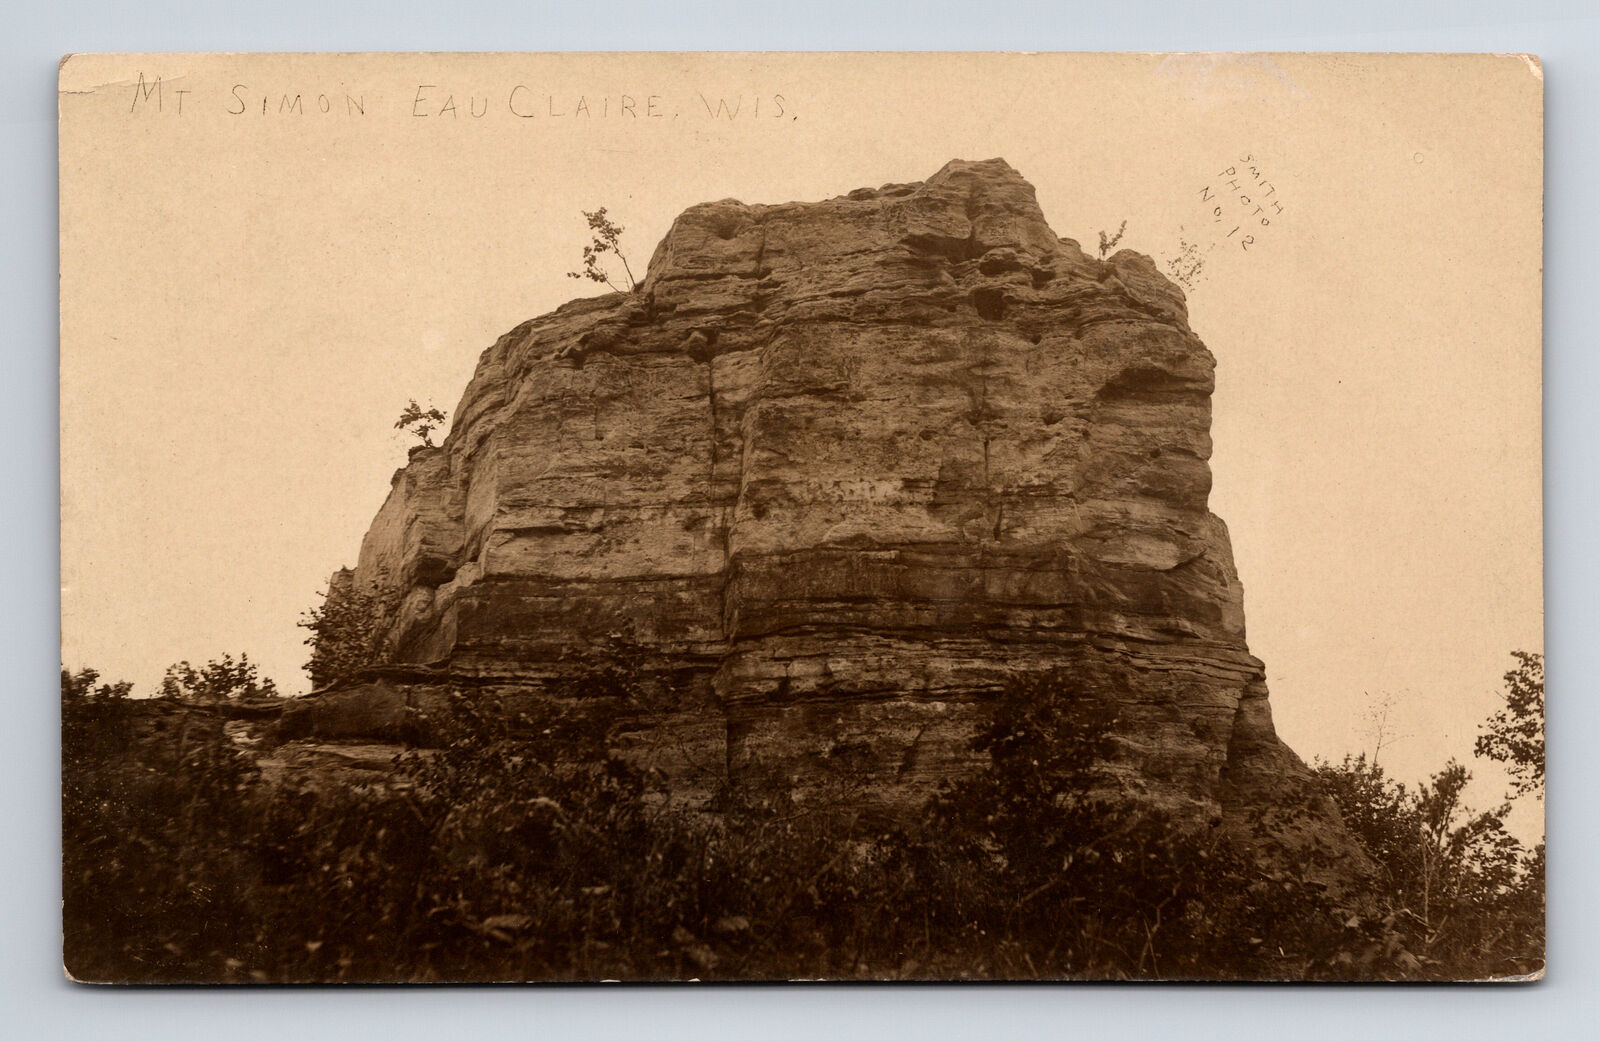 c1911 RPPC Mt Simon Rock Formation Smith Photo Eua Claire Wisconsin WI Postcard